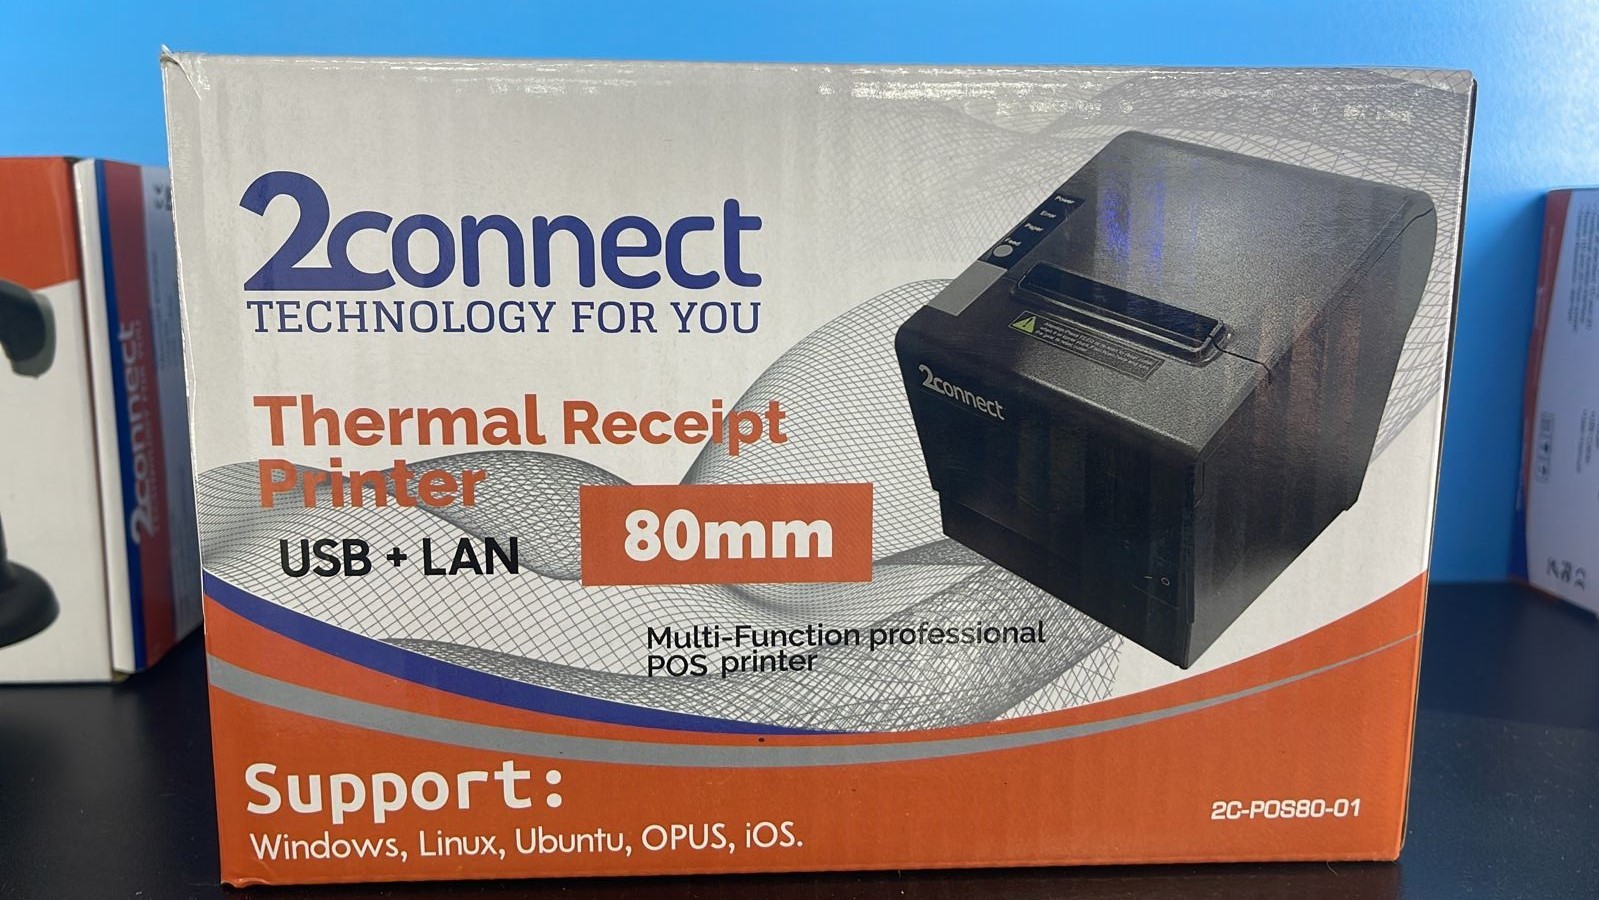 impresoras y scanners - PRINTER TERMICO 80MM USB + LAN 2CONN 0